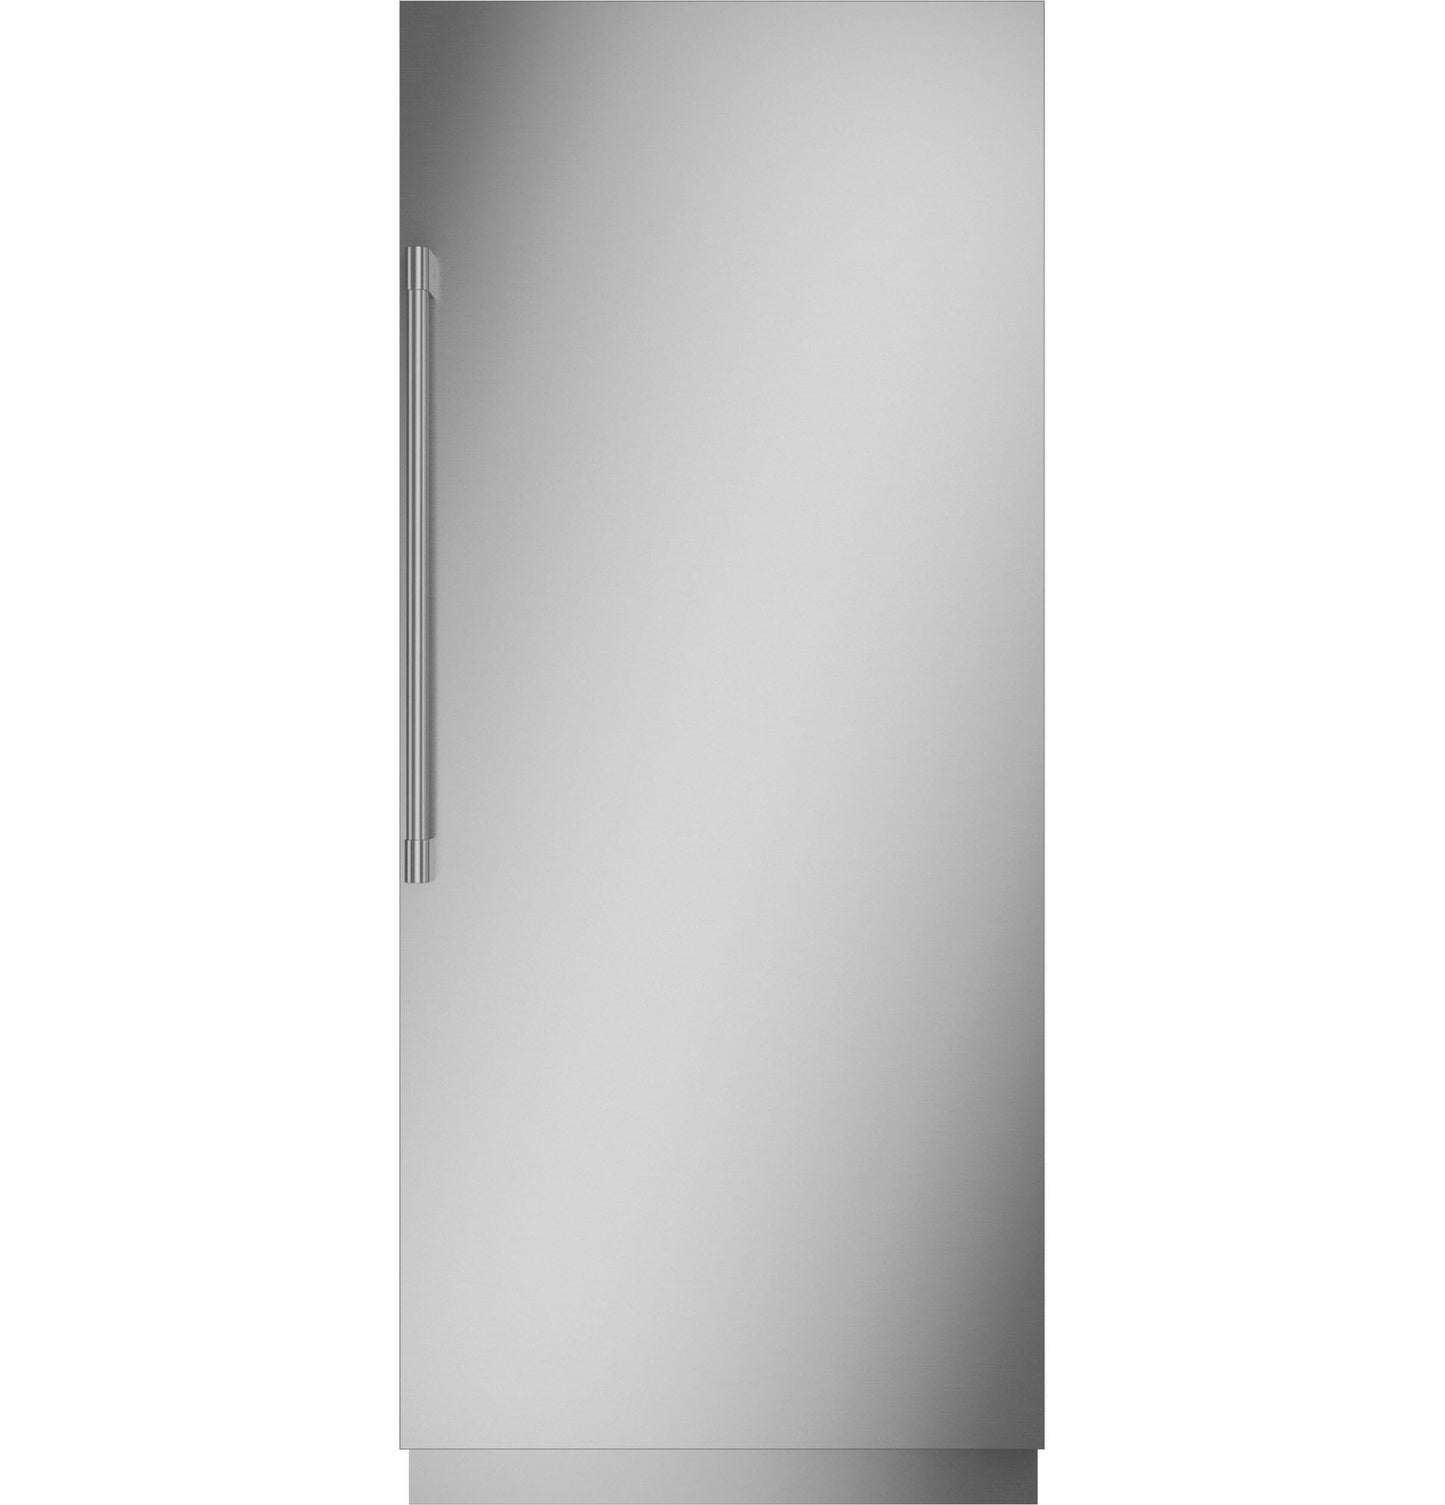 Monogram ZIR361NBRII Monogram 36" Integrated Column Refrigerator